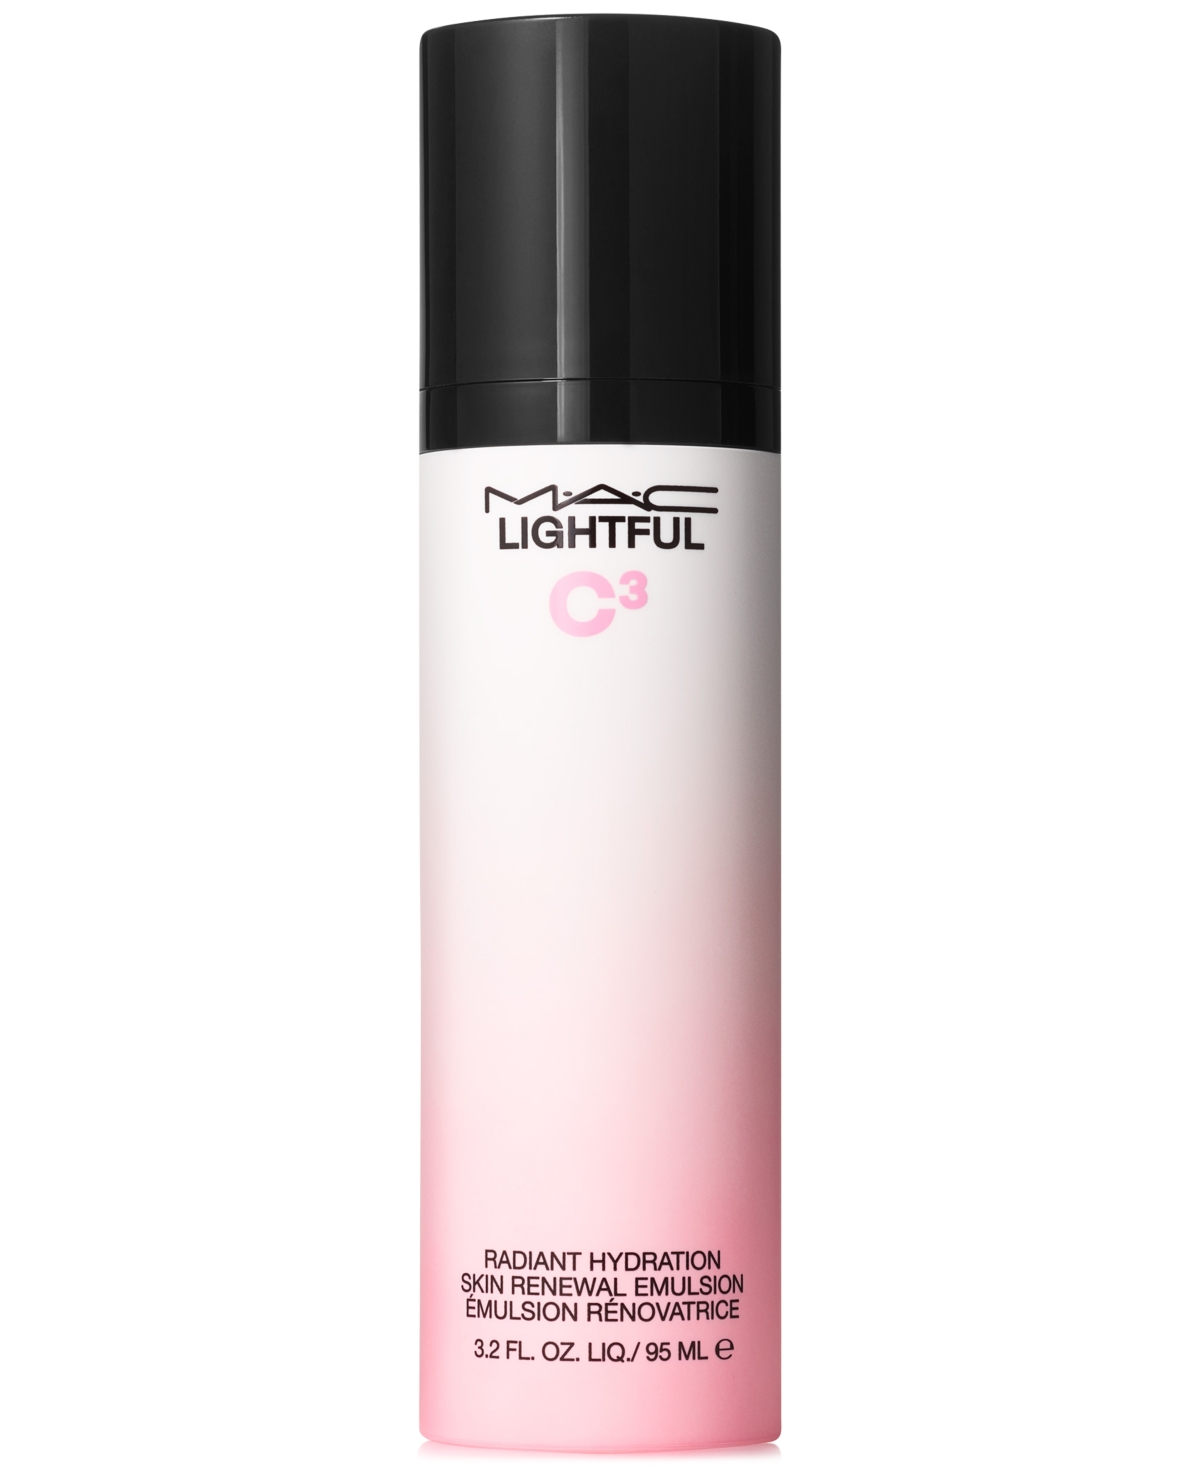 Mac Lightful Câ³ Radiant Hydration Skin Renewal Emulsion In No Color